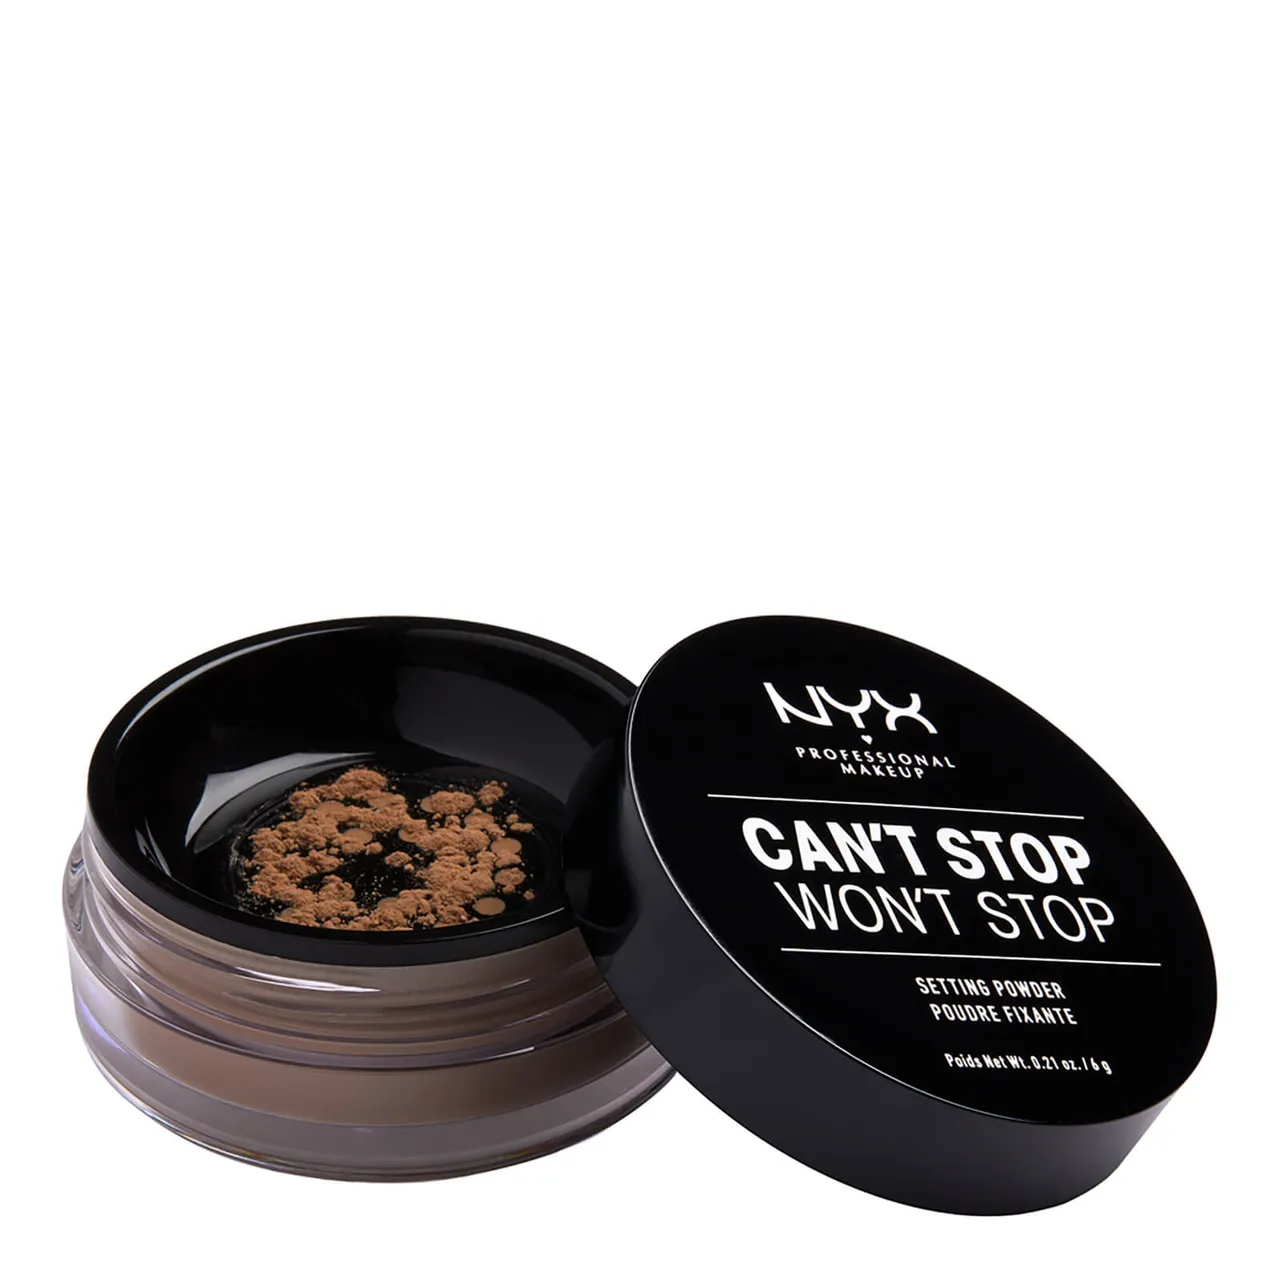 NYX Professional Makeup Can't Stop Won't Stop Setting Powder (Various Shades) - Medium Deep